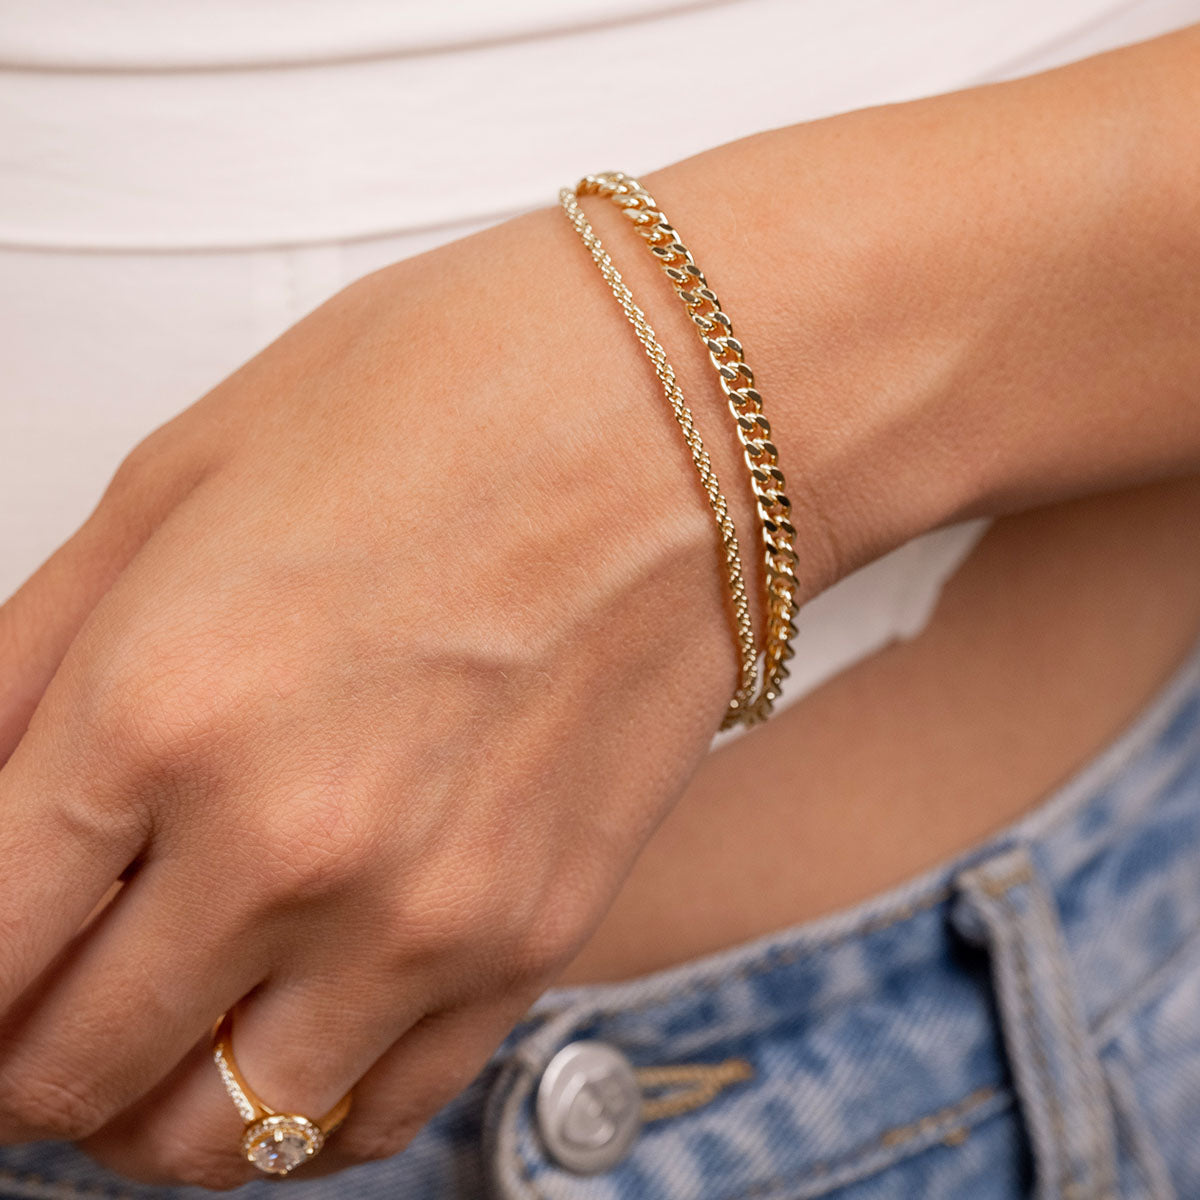 Layered gold rope bracelet on model